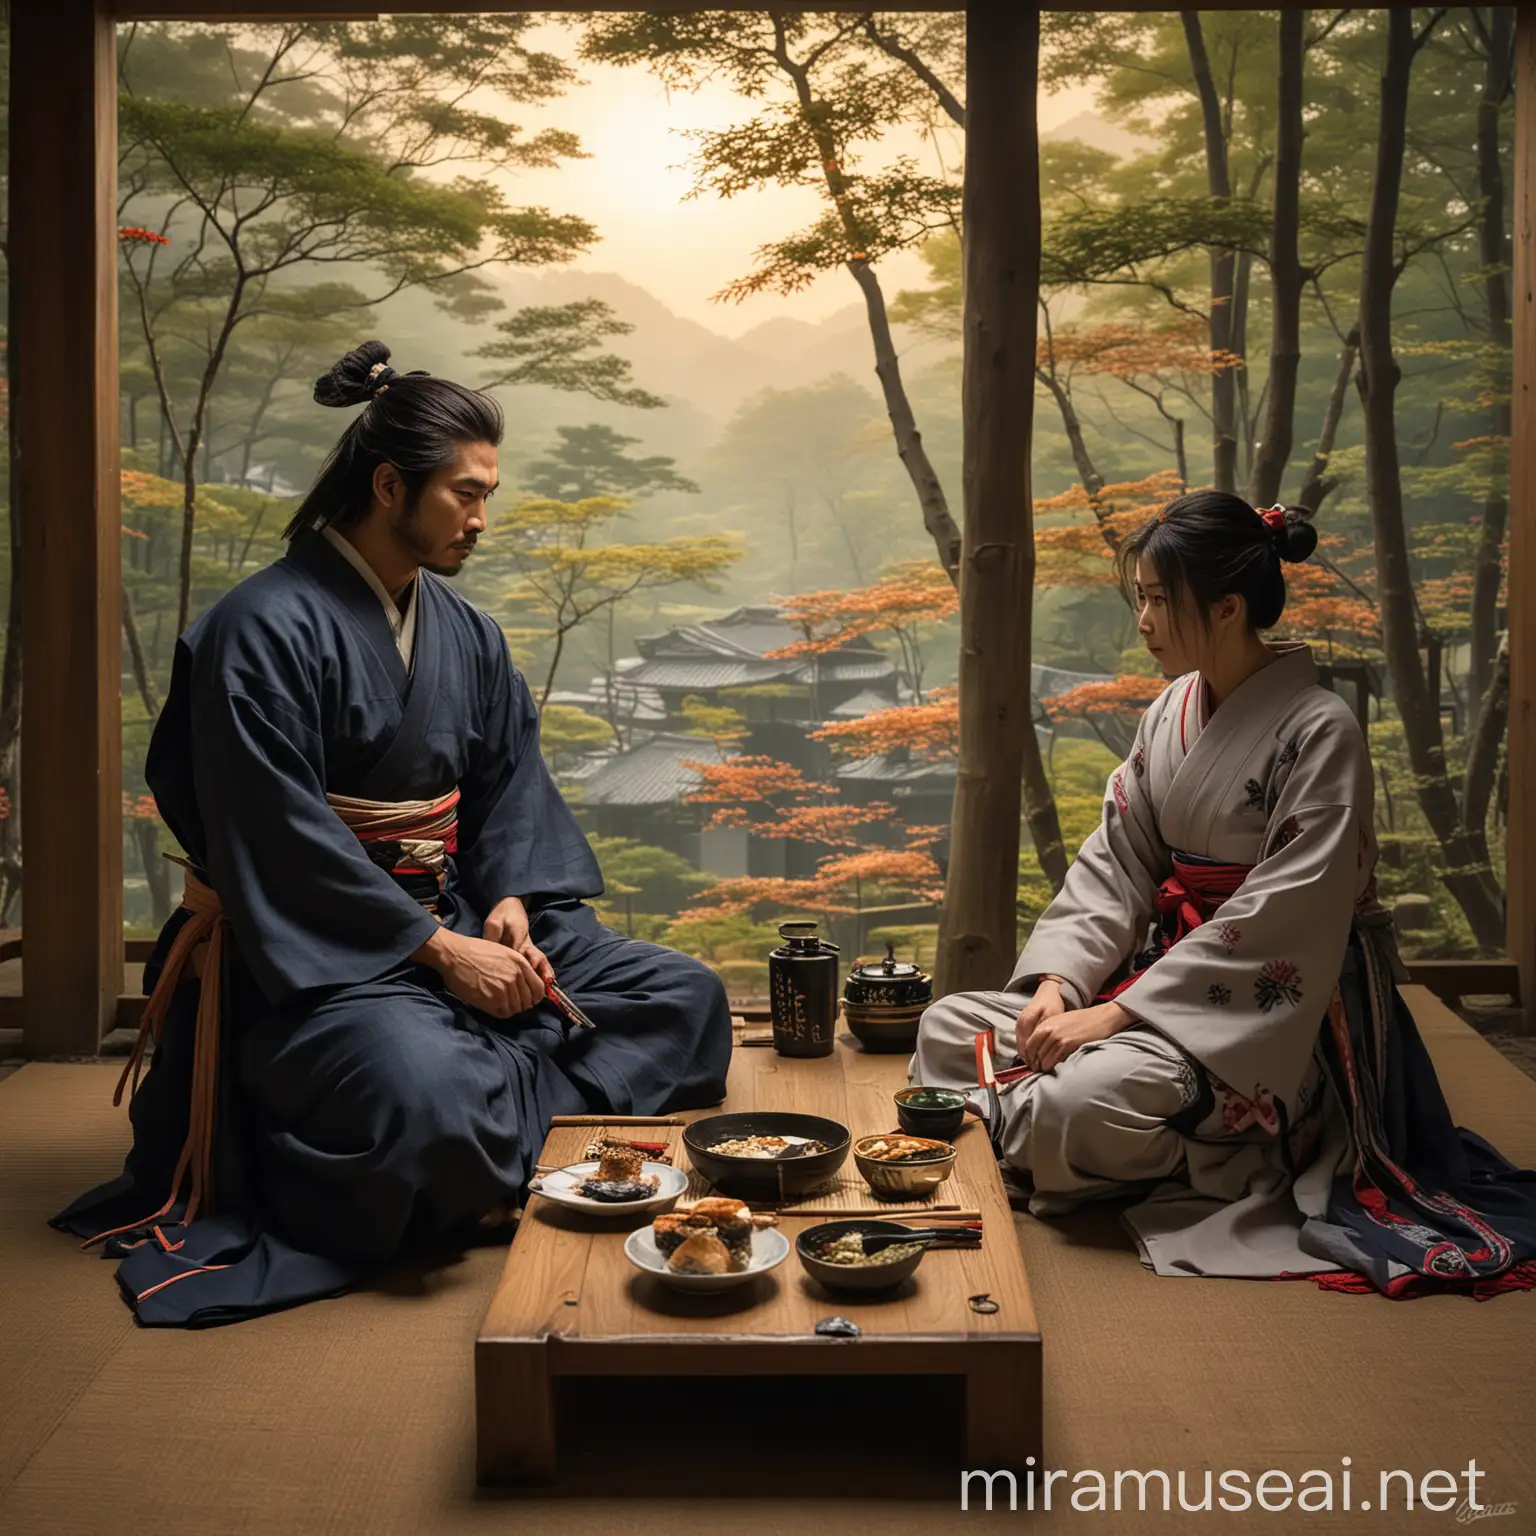 Samurai and Kunoichi Sharing a Quiet Meal